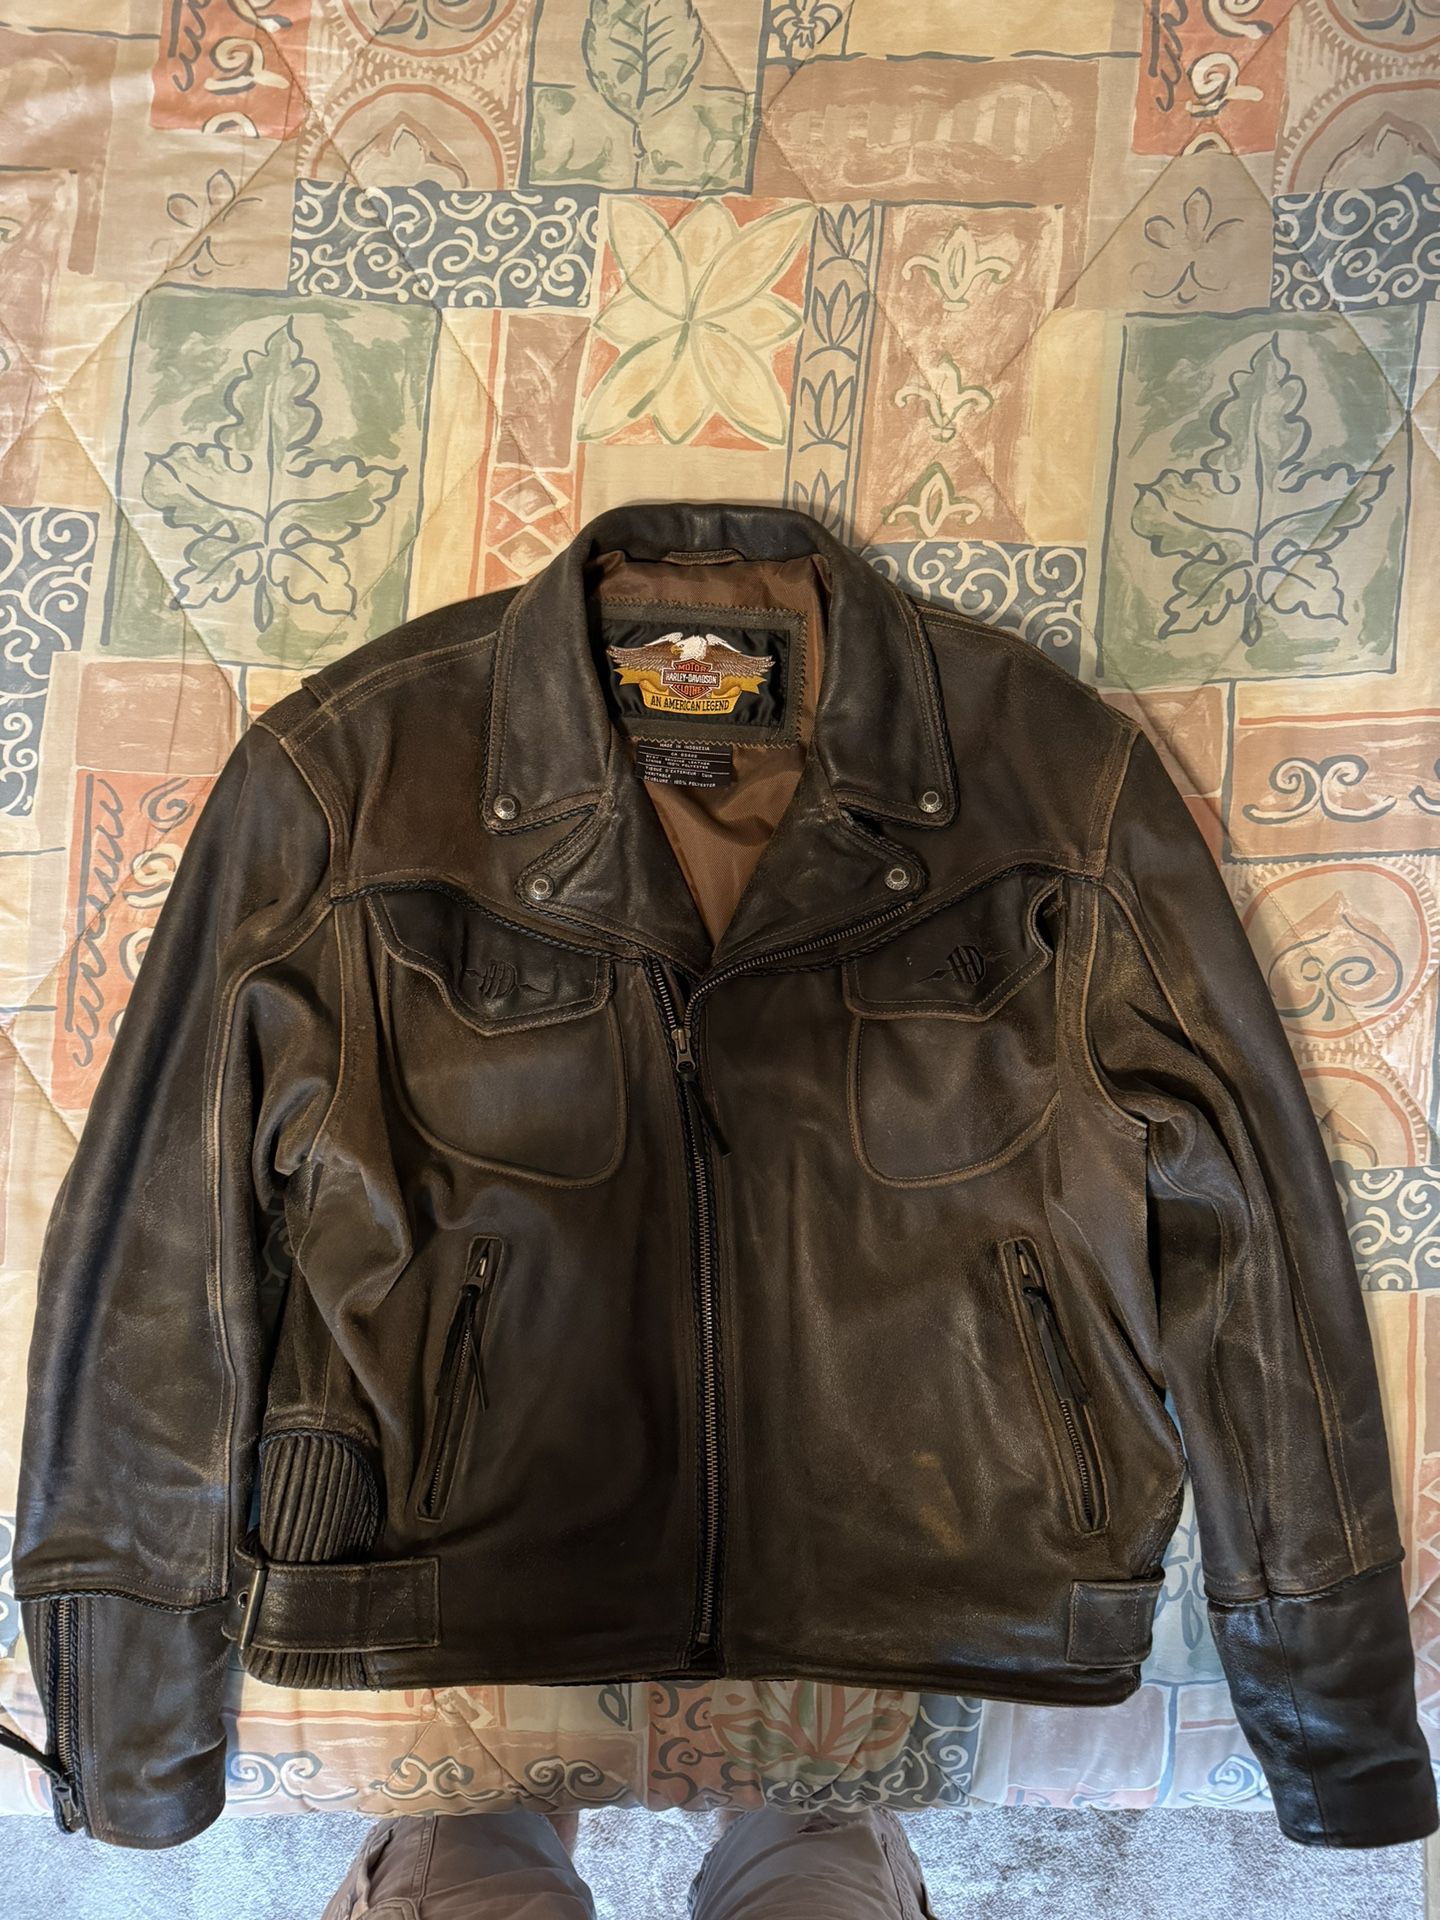 Harley-Davidson Distressed Leather Jacket 